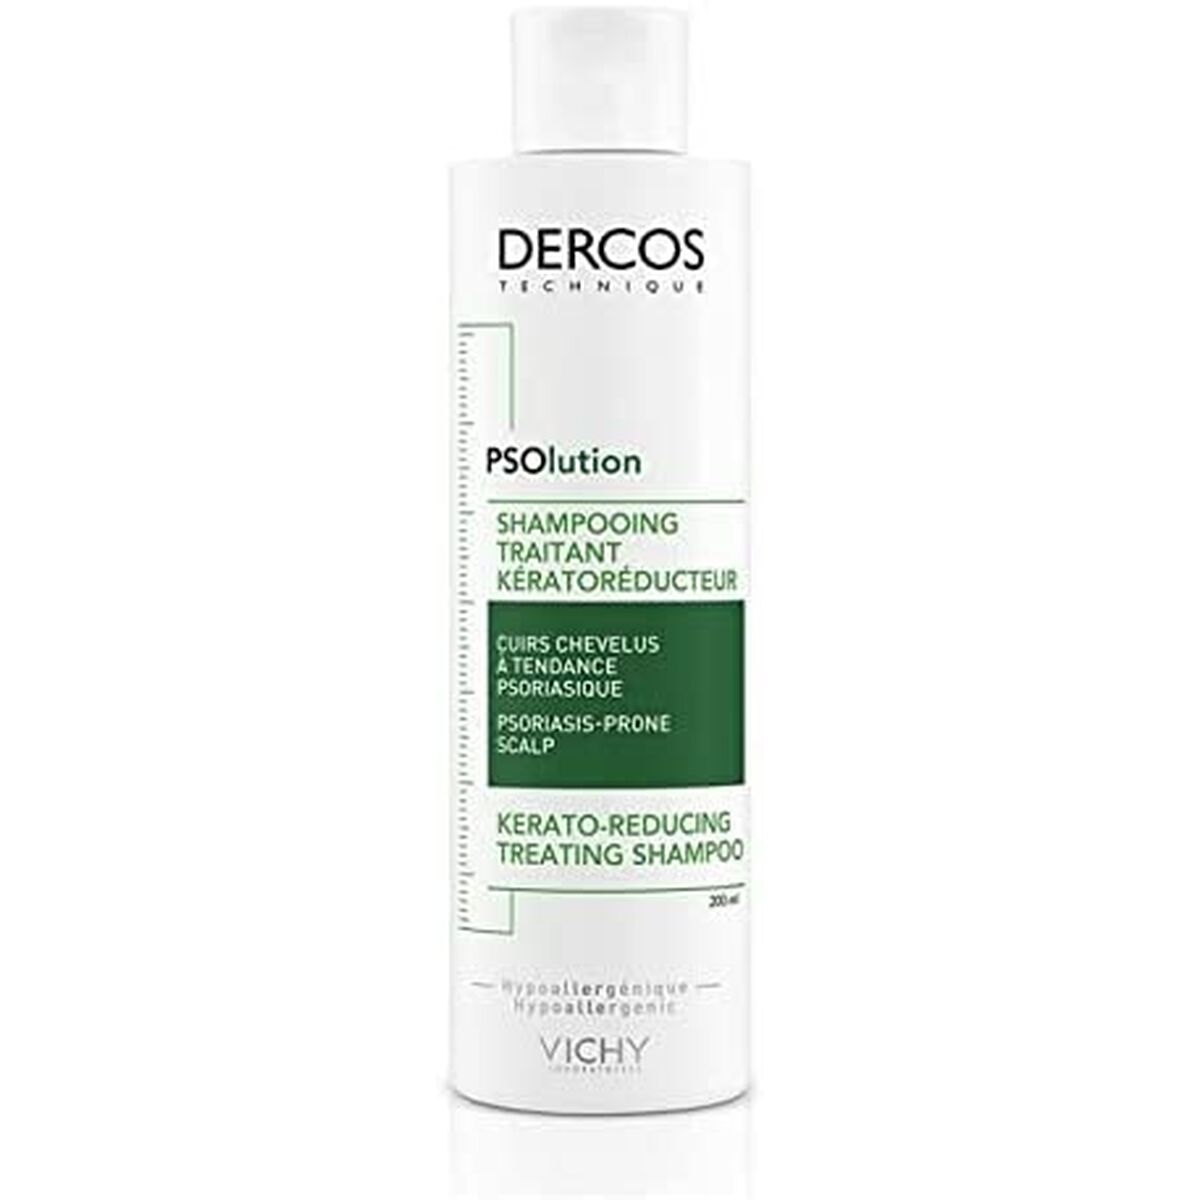 Shampoo Vichy Dercos PSOlution Irritated scalp 200 ml-0